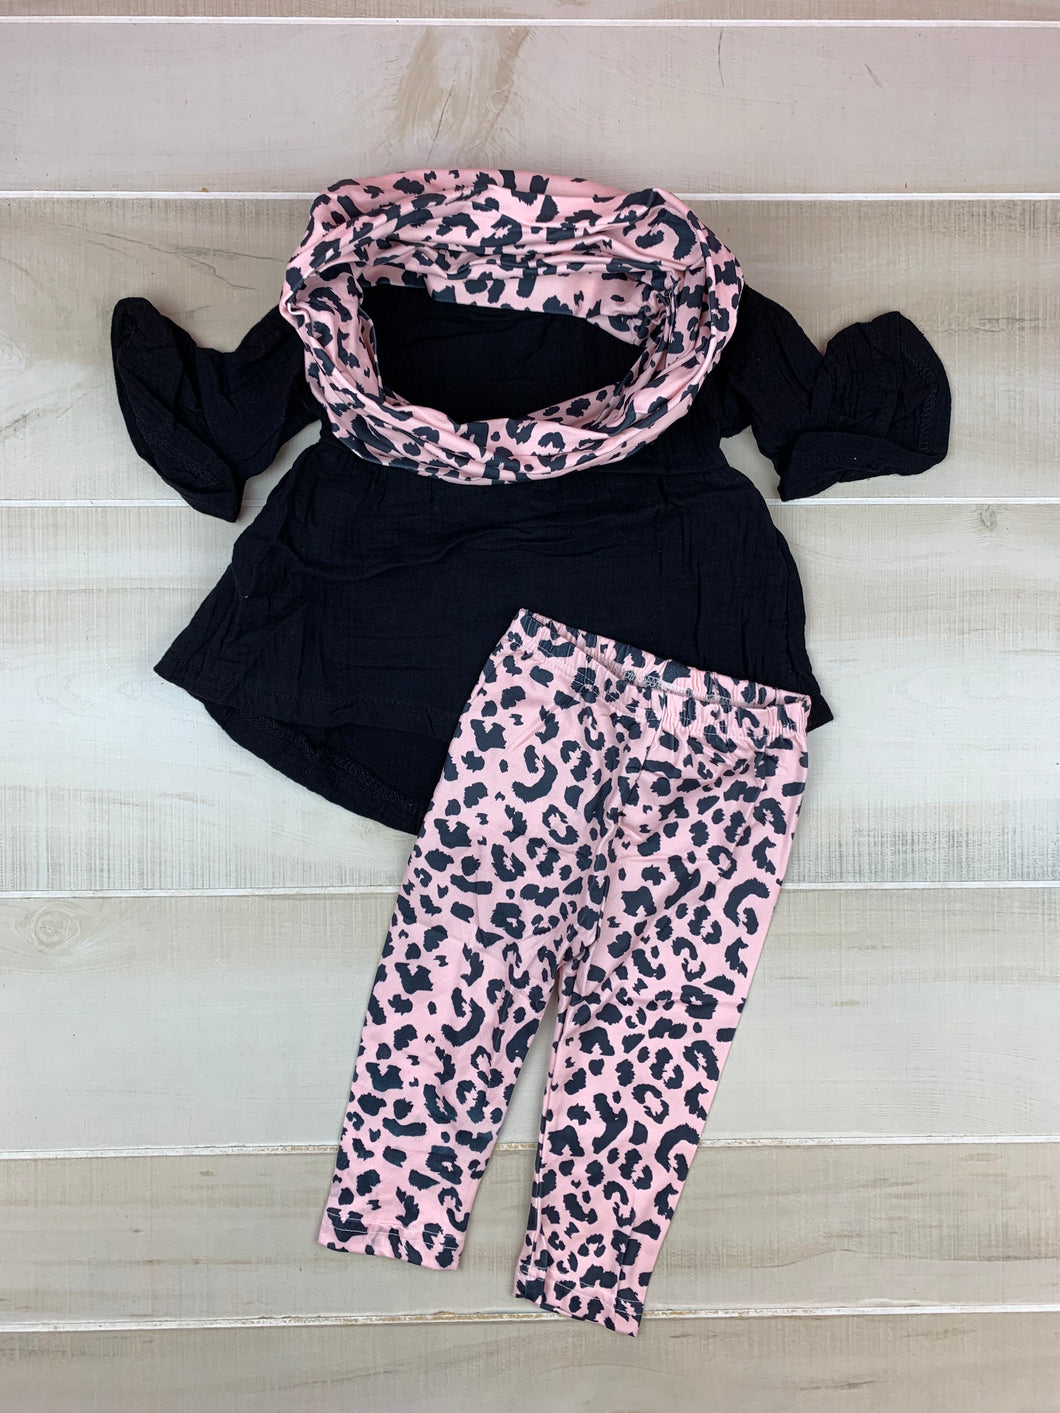 3 Piece black & leopard tunic outfit